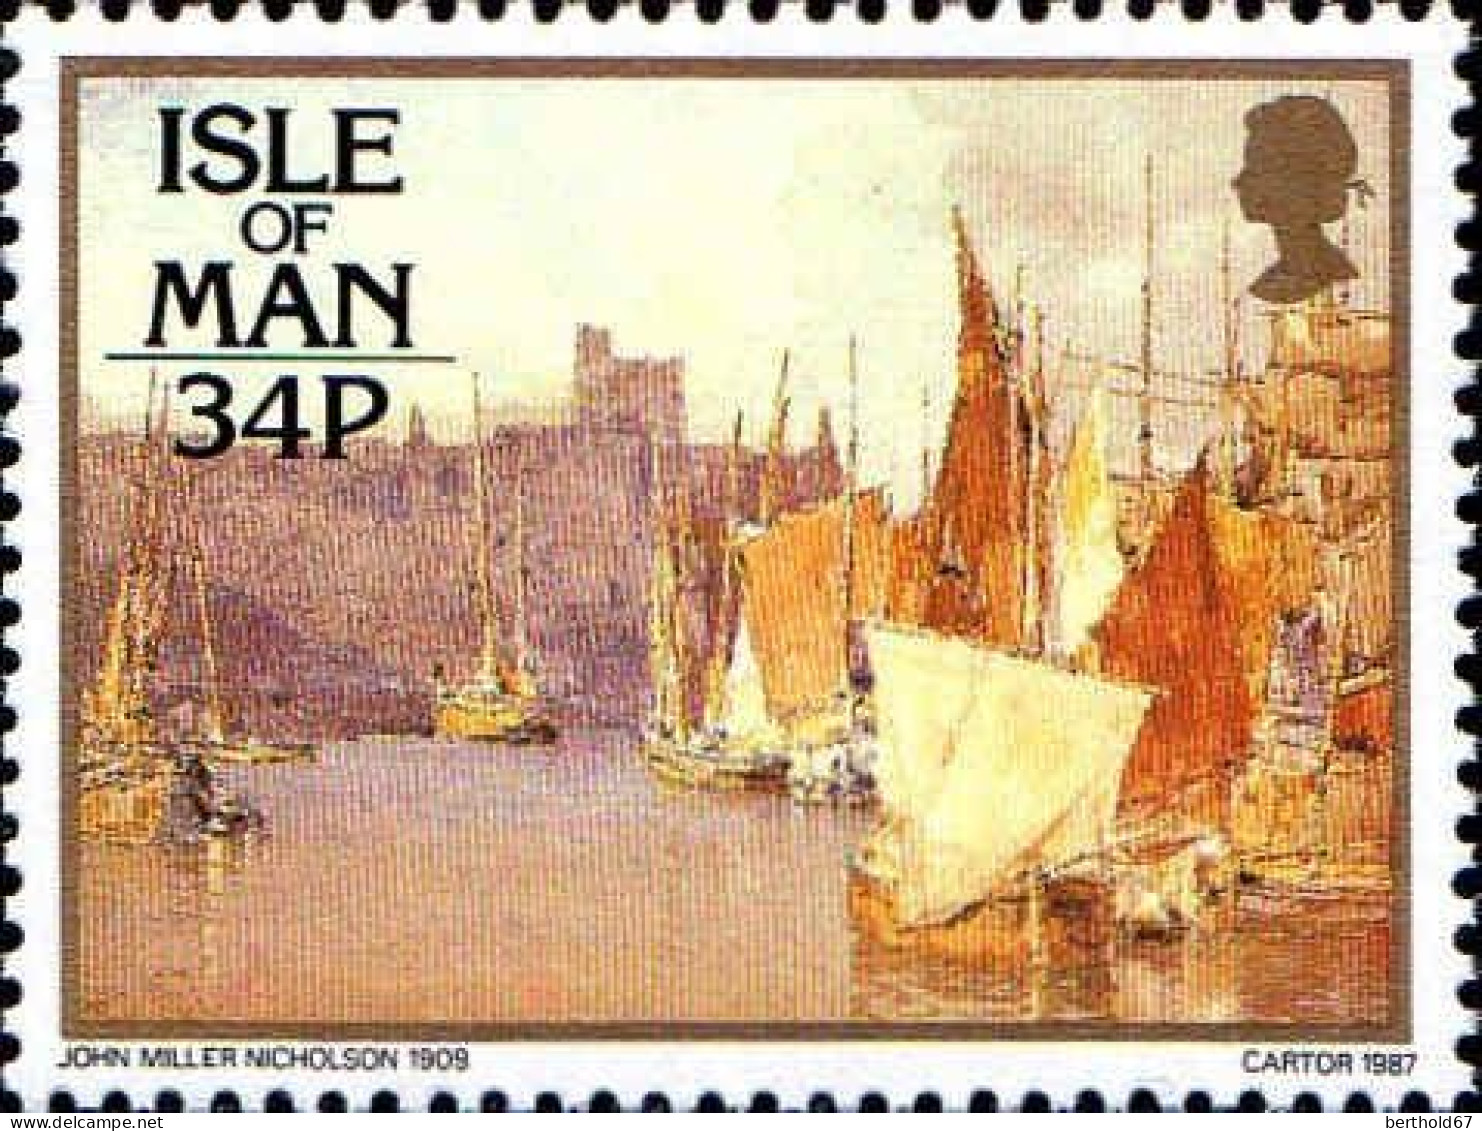 Man Poste N** Yv:326/329 John Miller Nicholson Tableaux - Isle Of Man